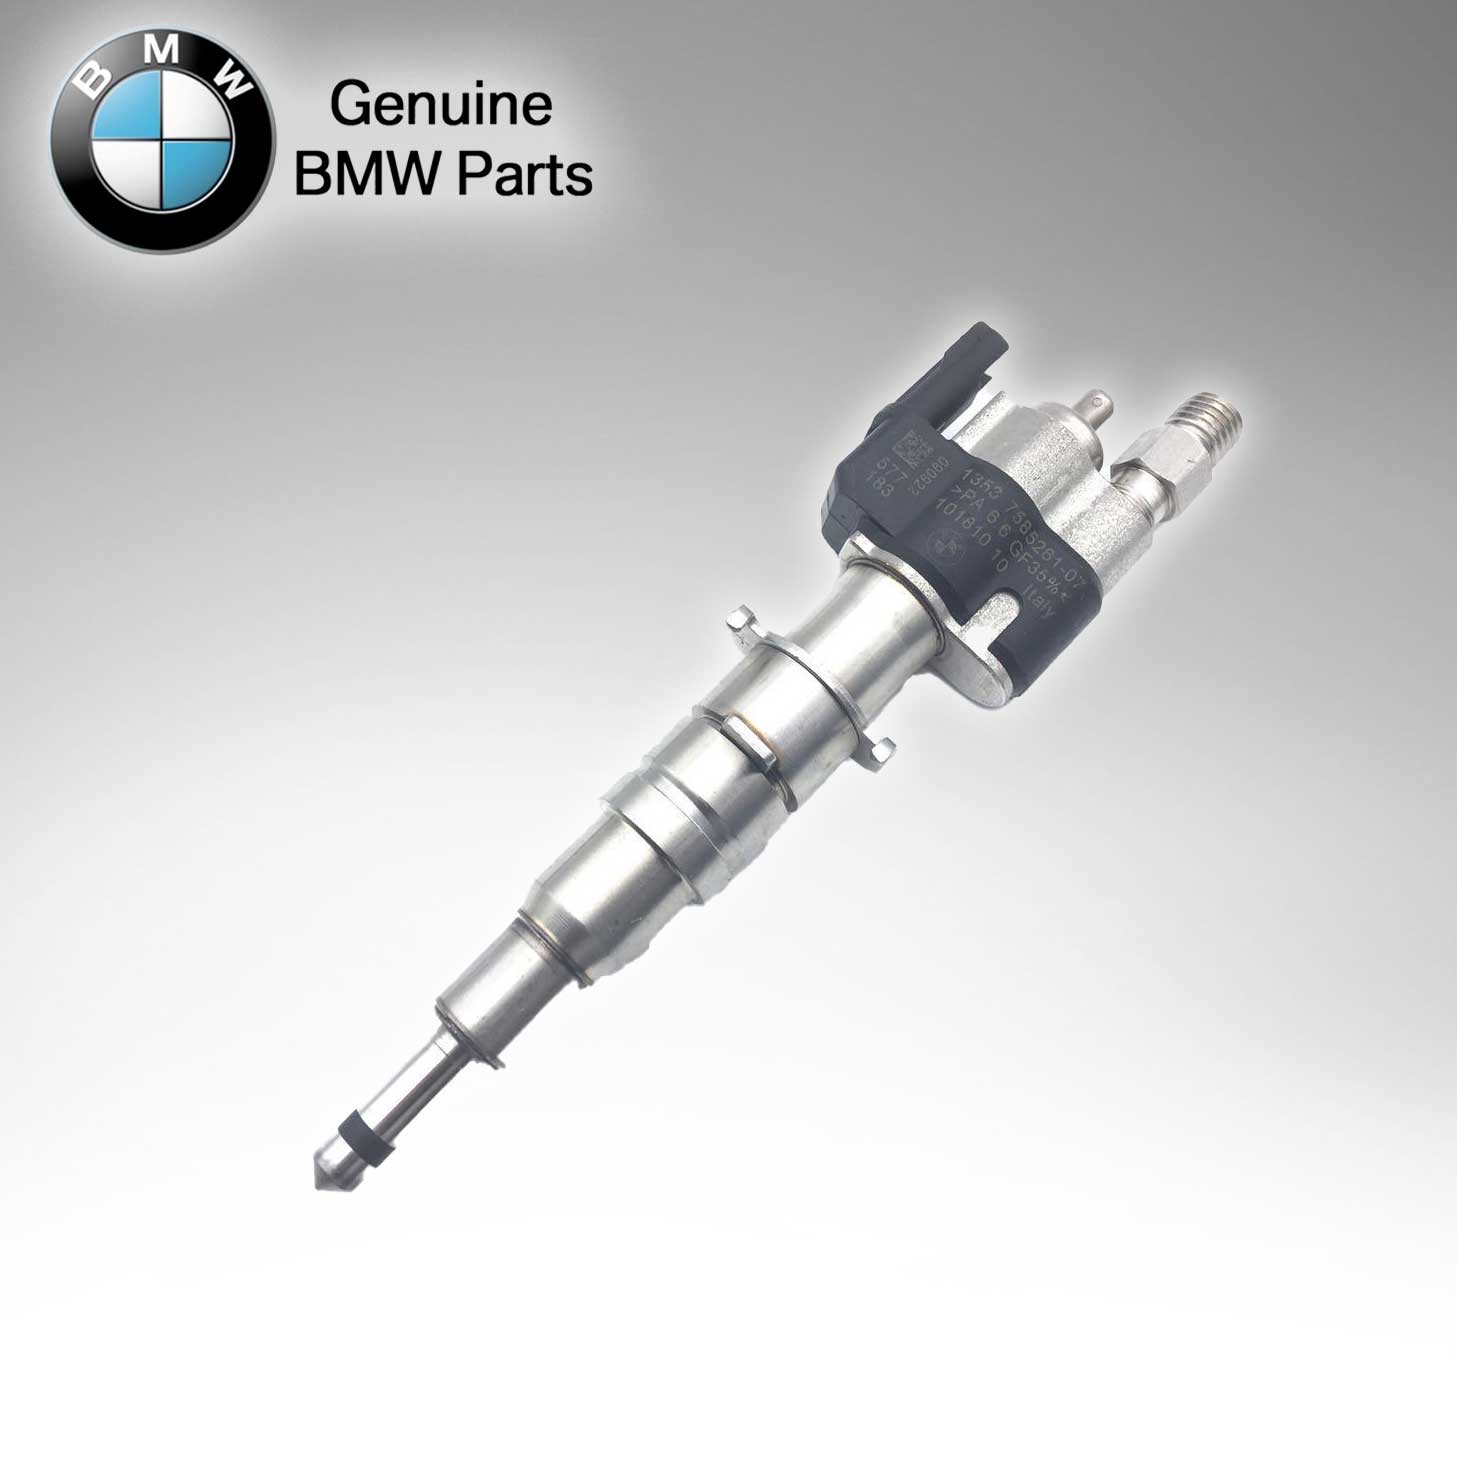 BMW Genuine Fuel Injector 13538616079